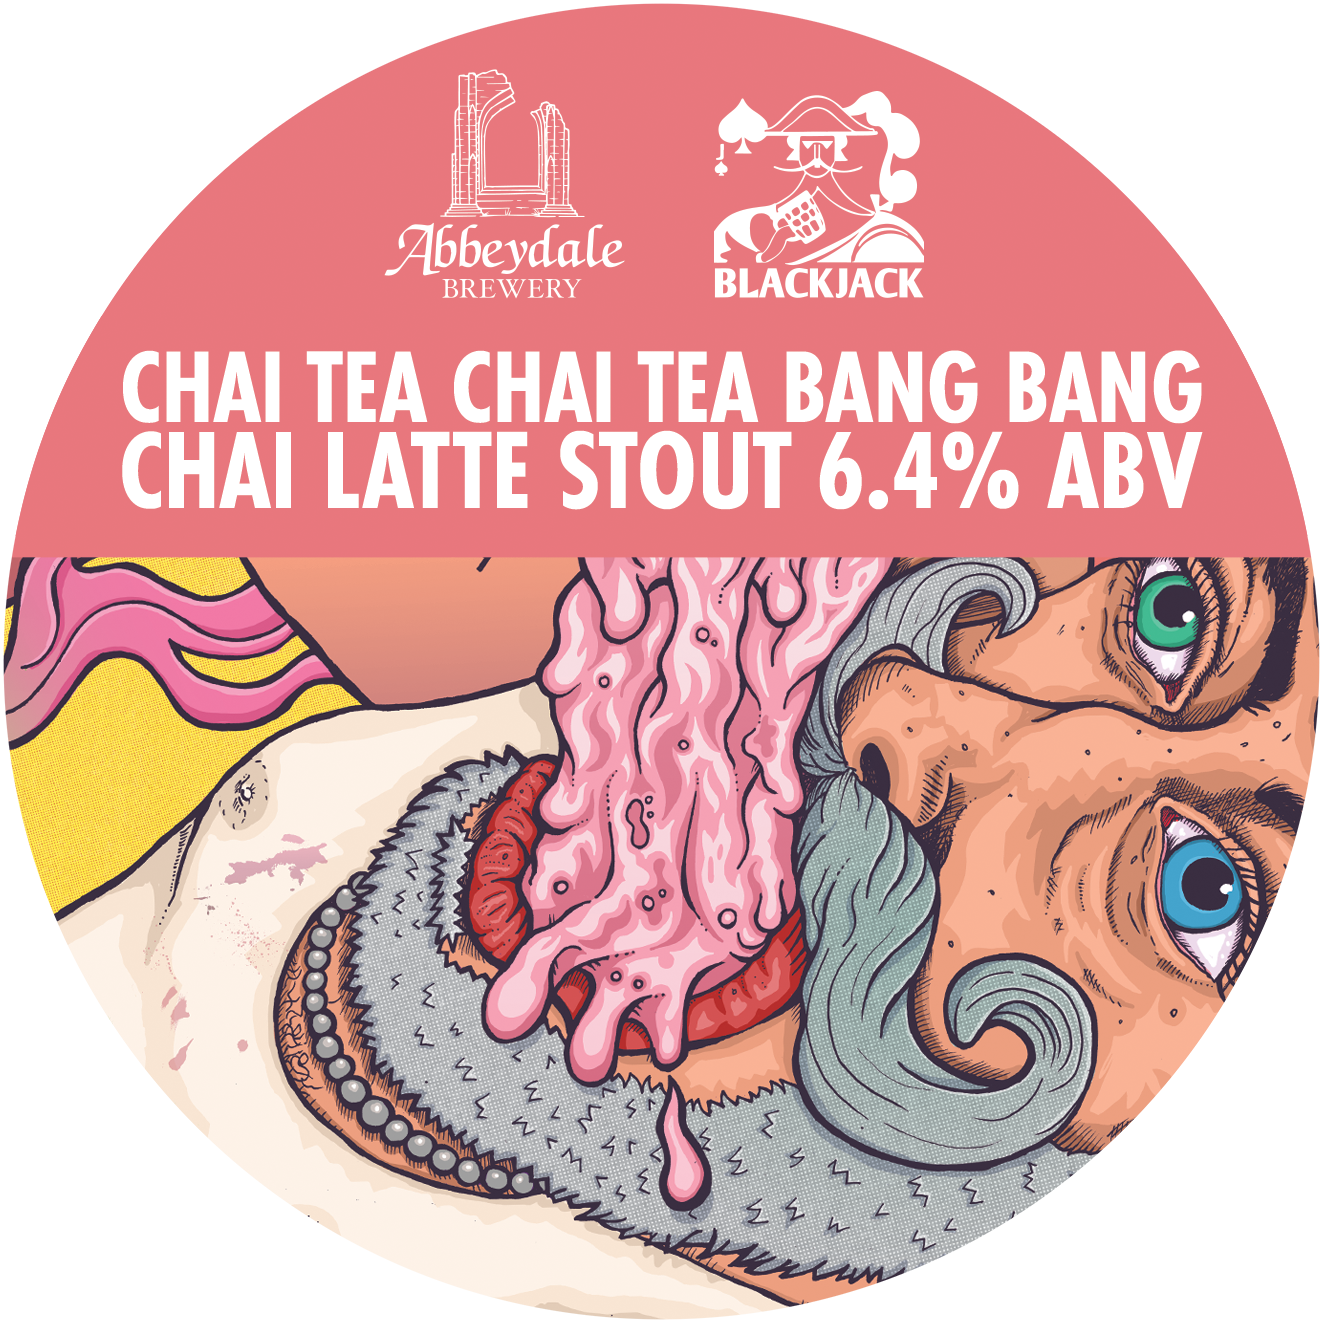 Craft Beer Label Illustration - Abbeydale Brewery - Black Jack Brewery - Chai Tea Chai Tea Bang Bang - Chai Latte Stout Keg Artwork